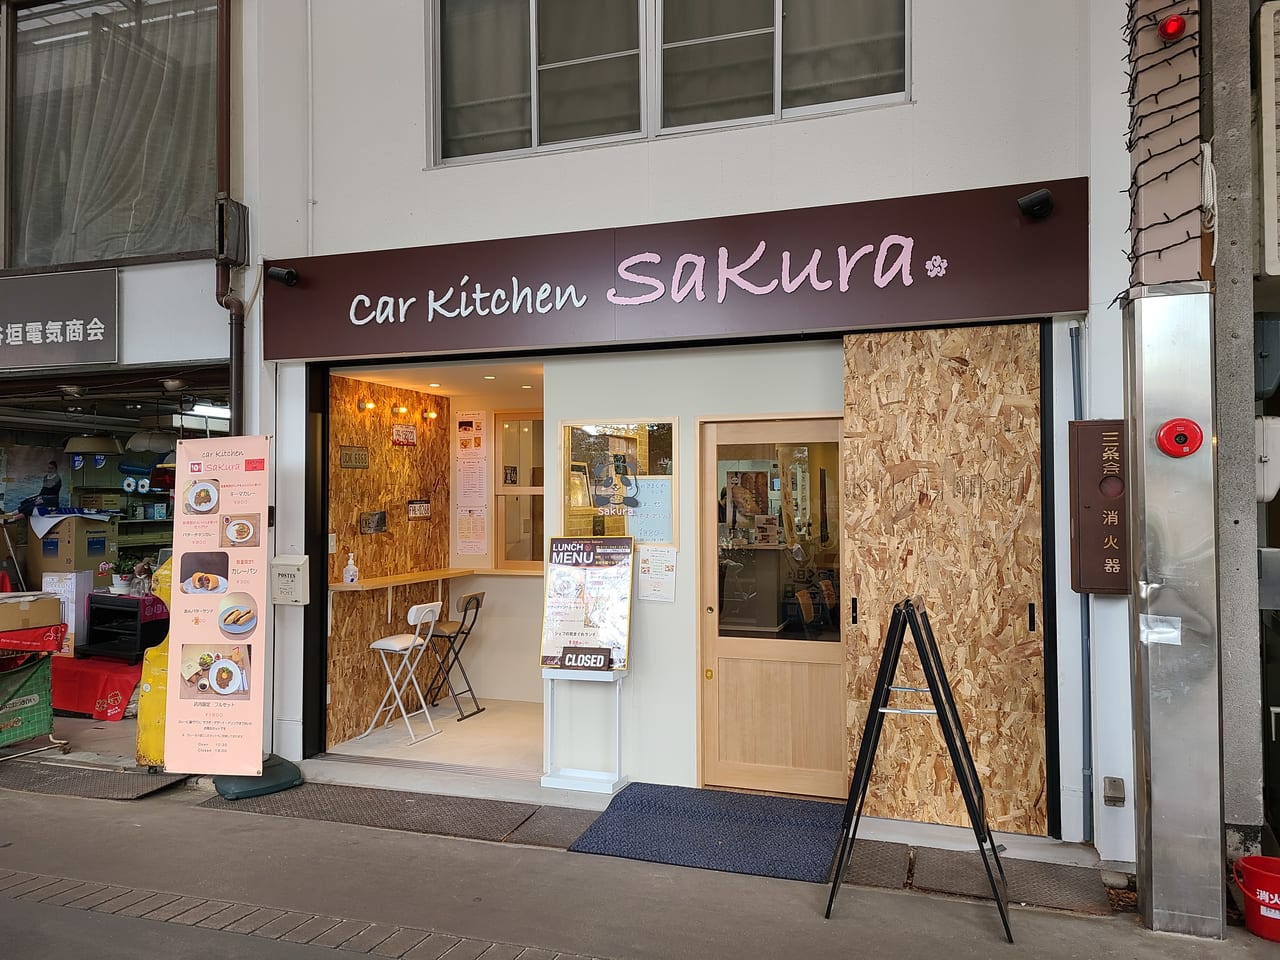 Car Kitchen Sakura